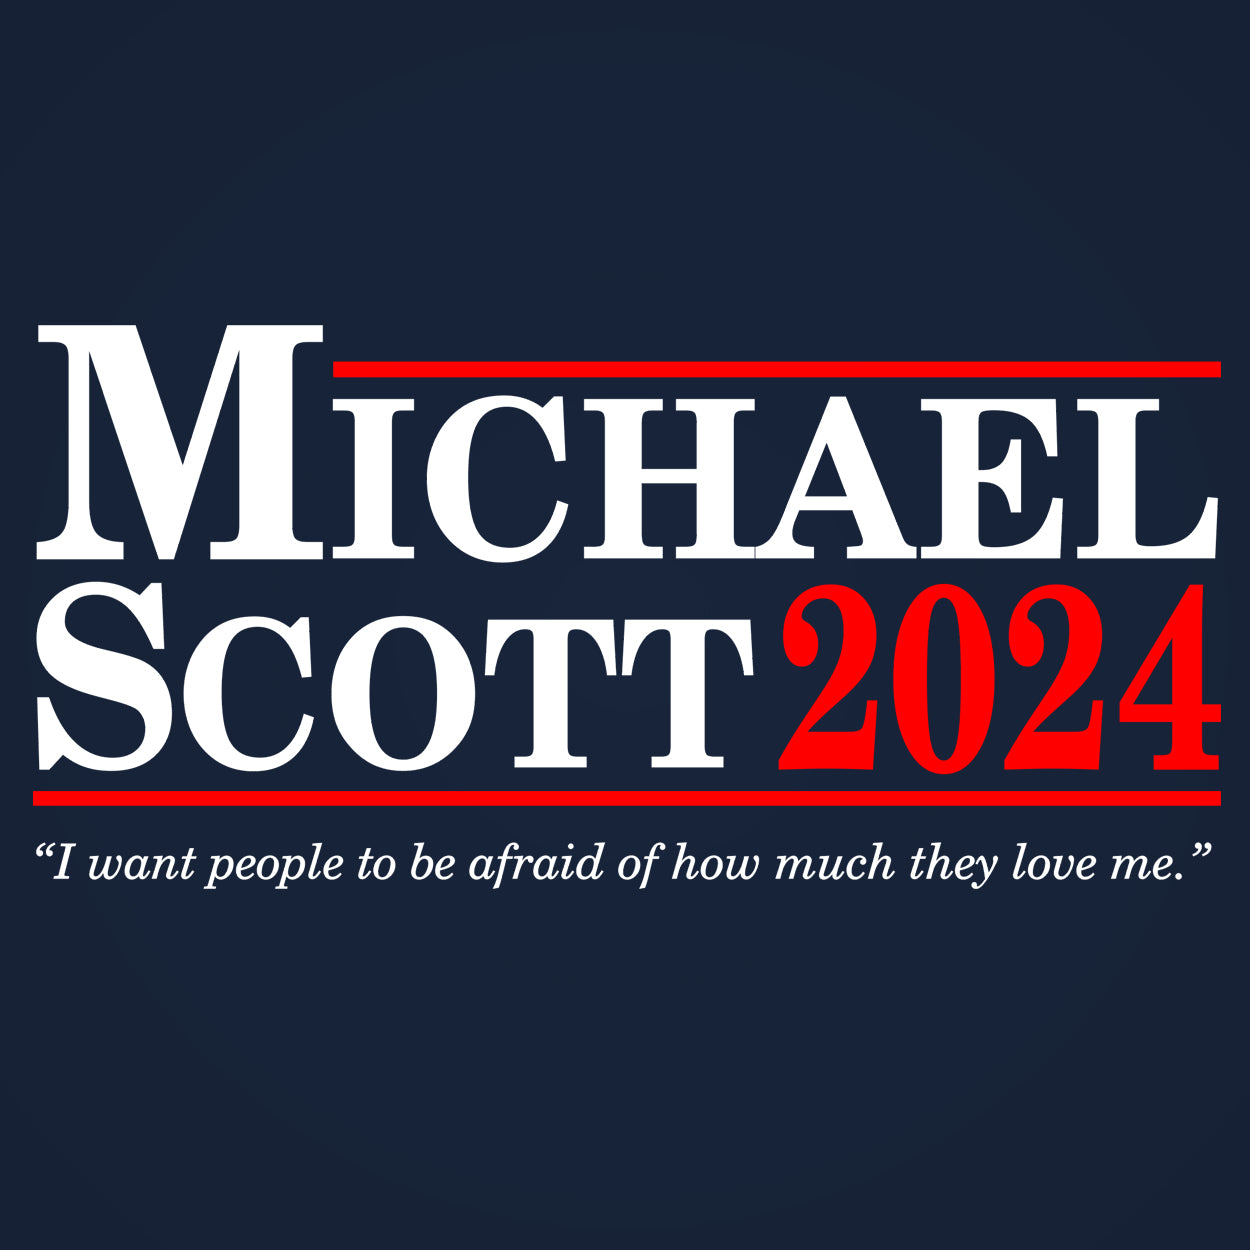 Michael Scott 2024 Election Tshirt - Donkey Tees